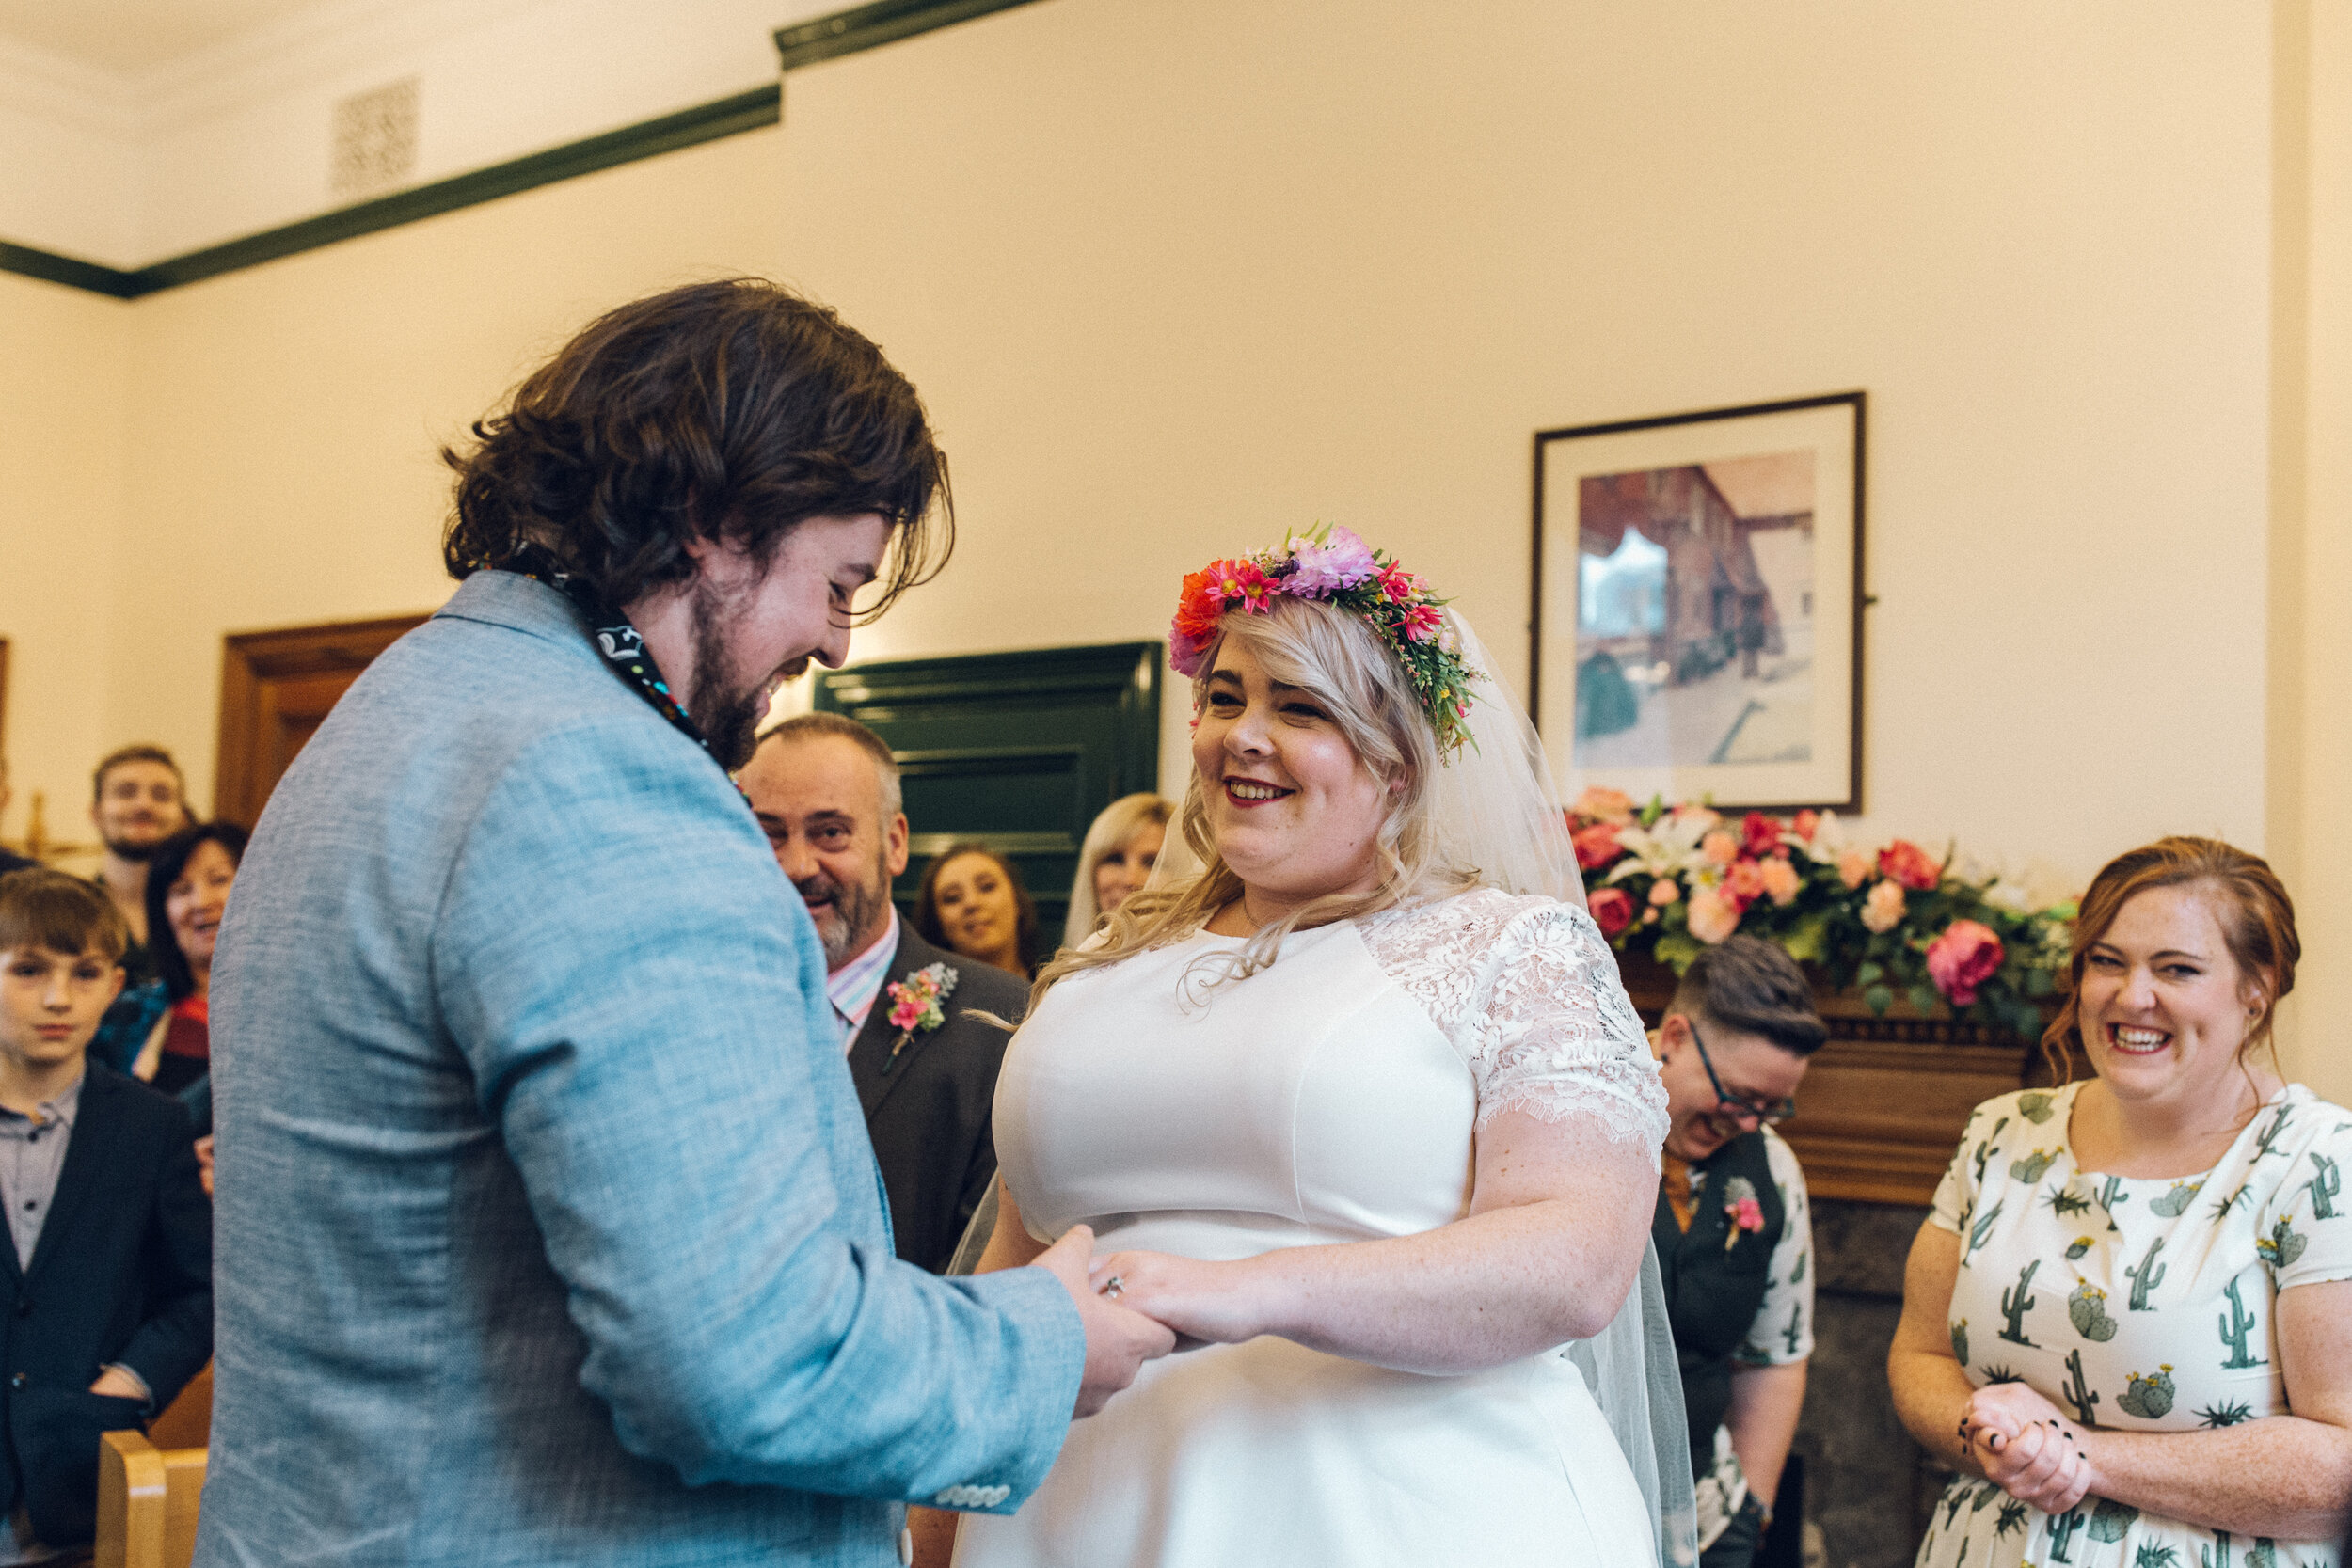 COLOURFUL ALTERNATIVE WEDDING AT PROJECT B IN CROYDON 